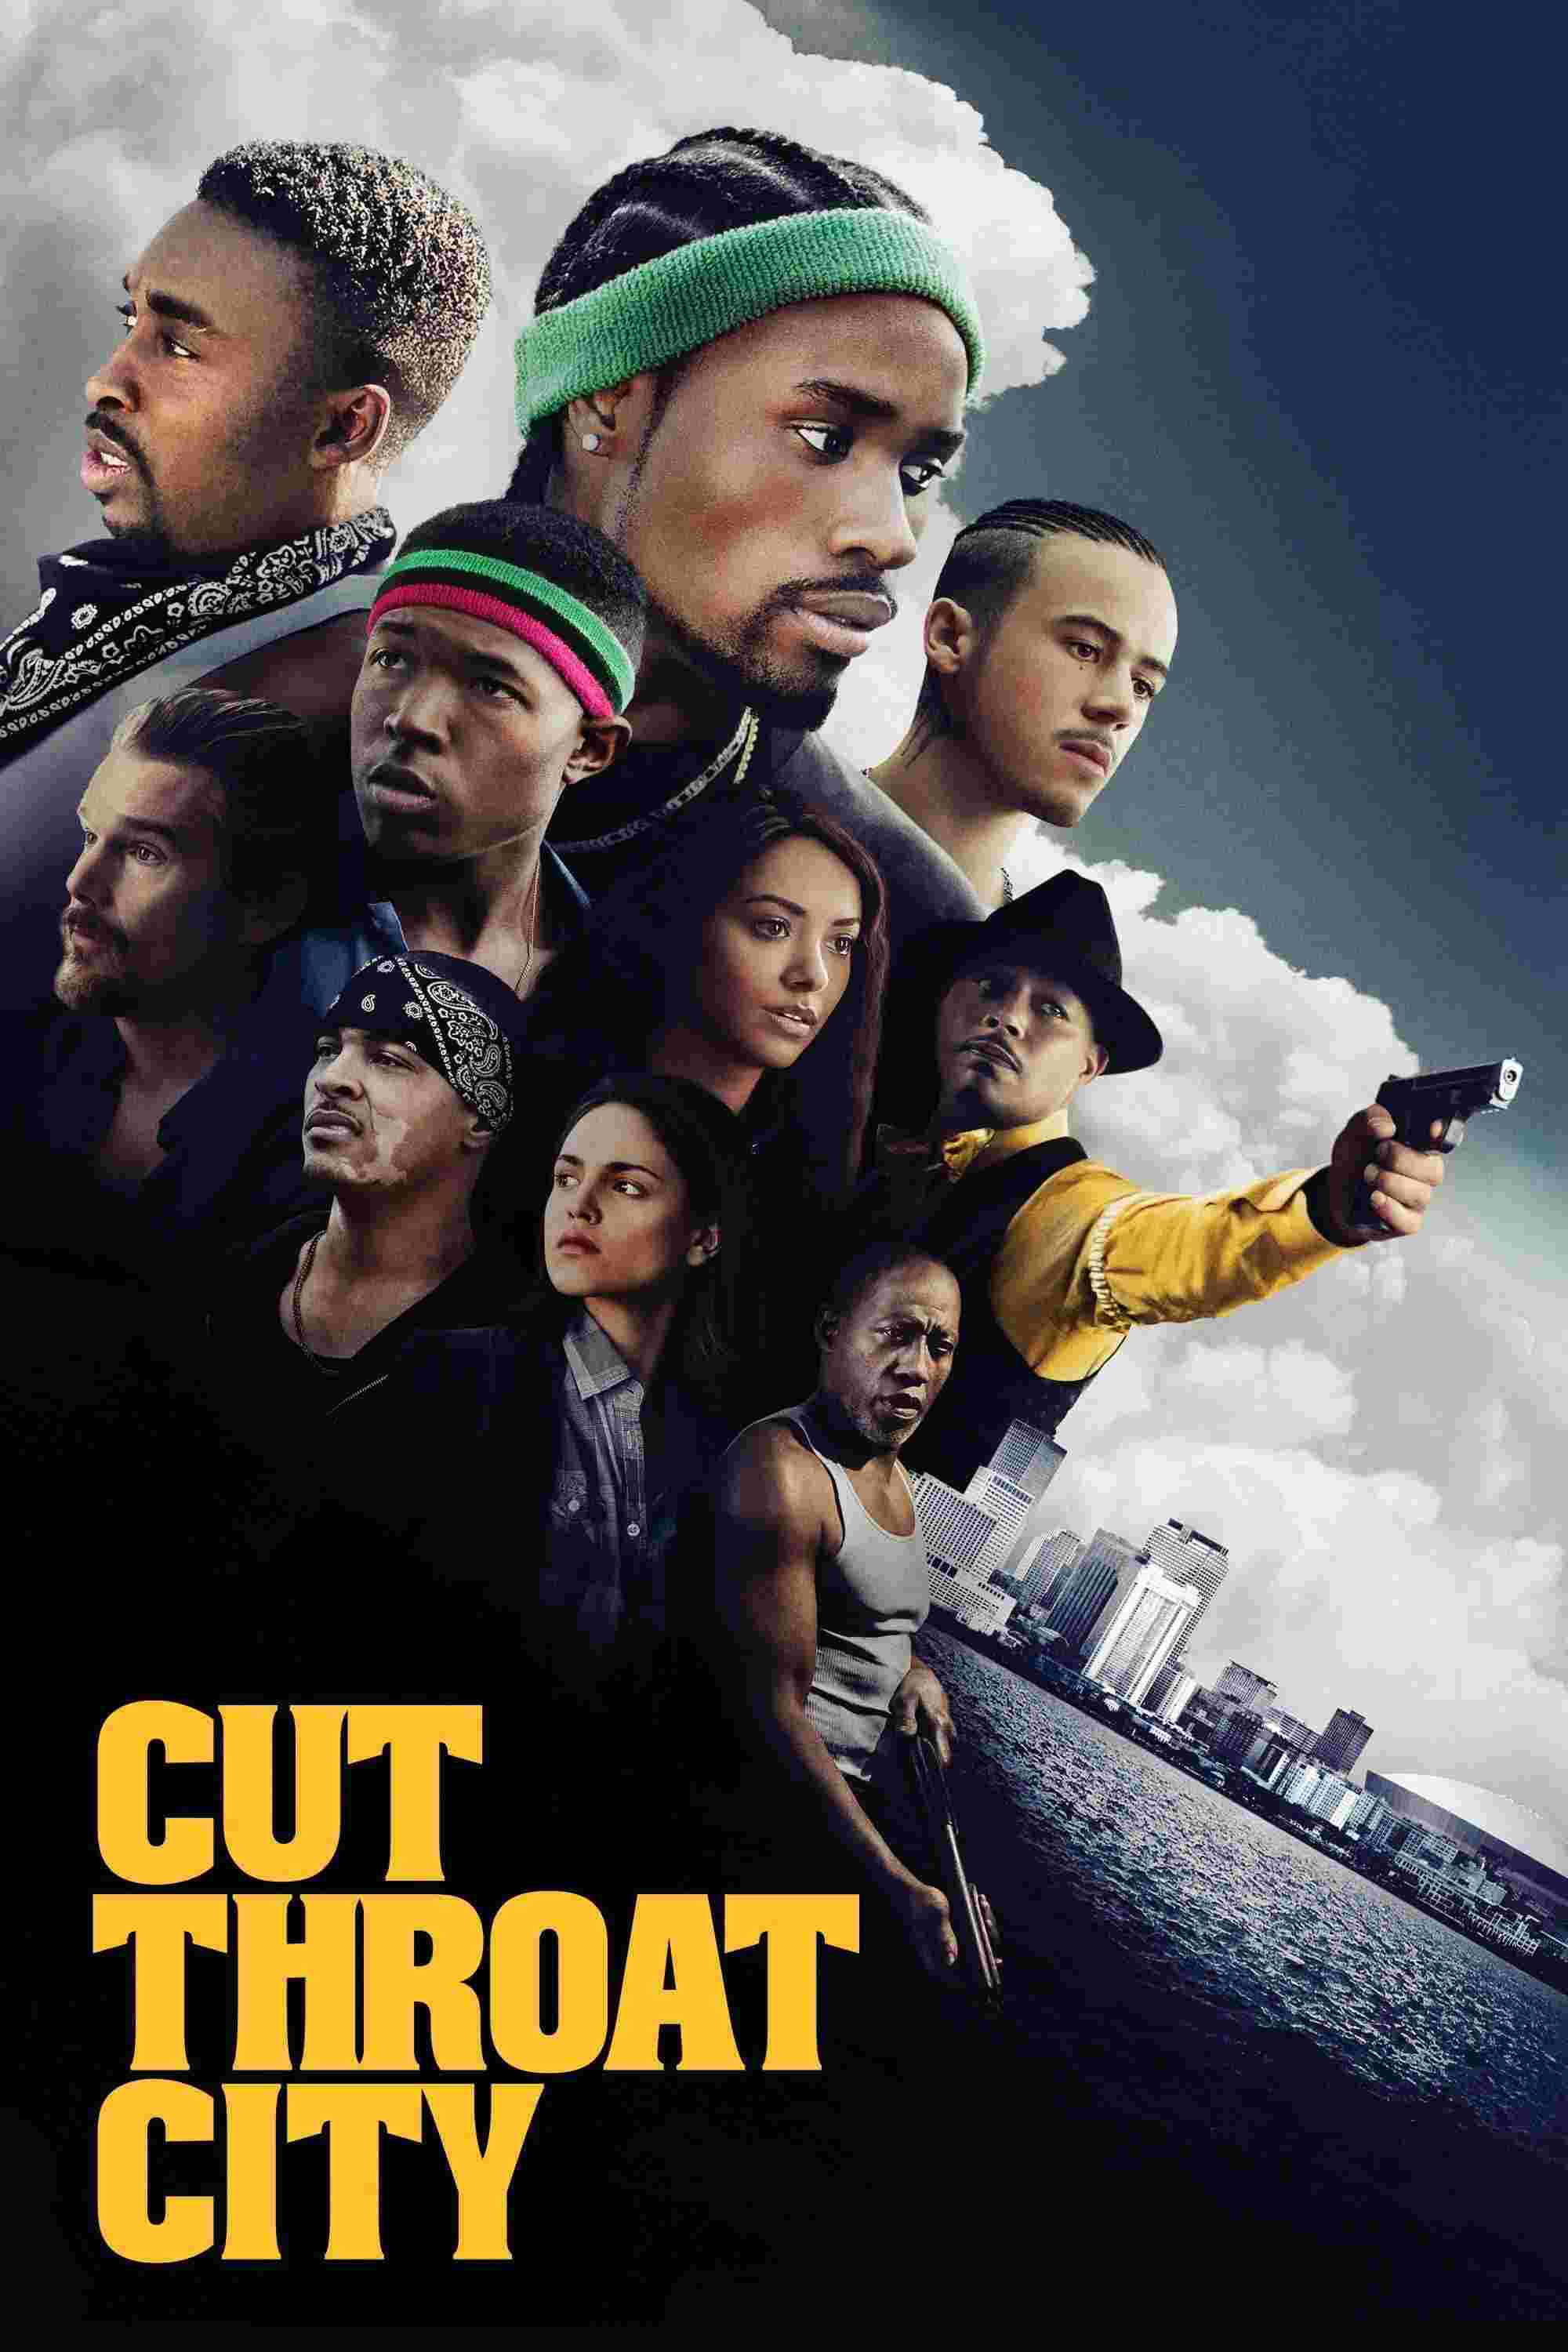 Cut Throat City (2020) Shameik Moore